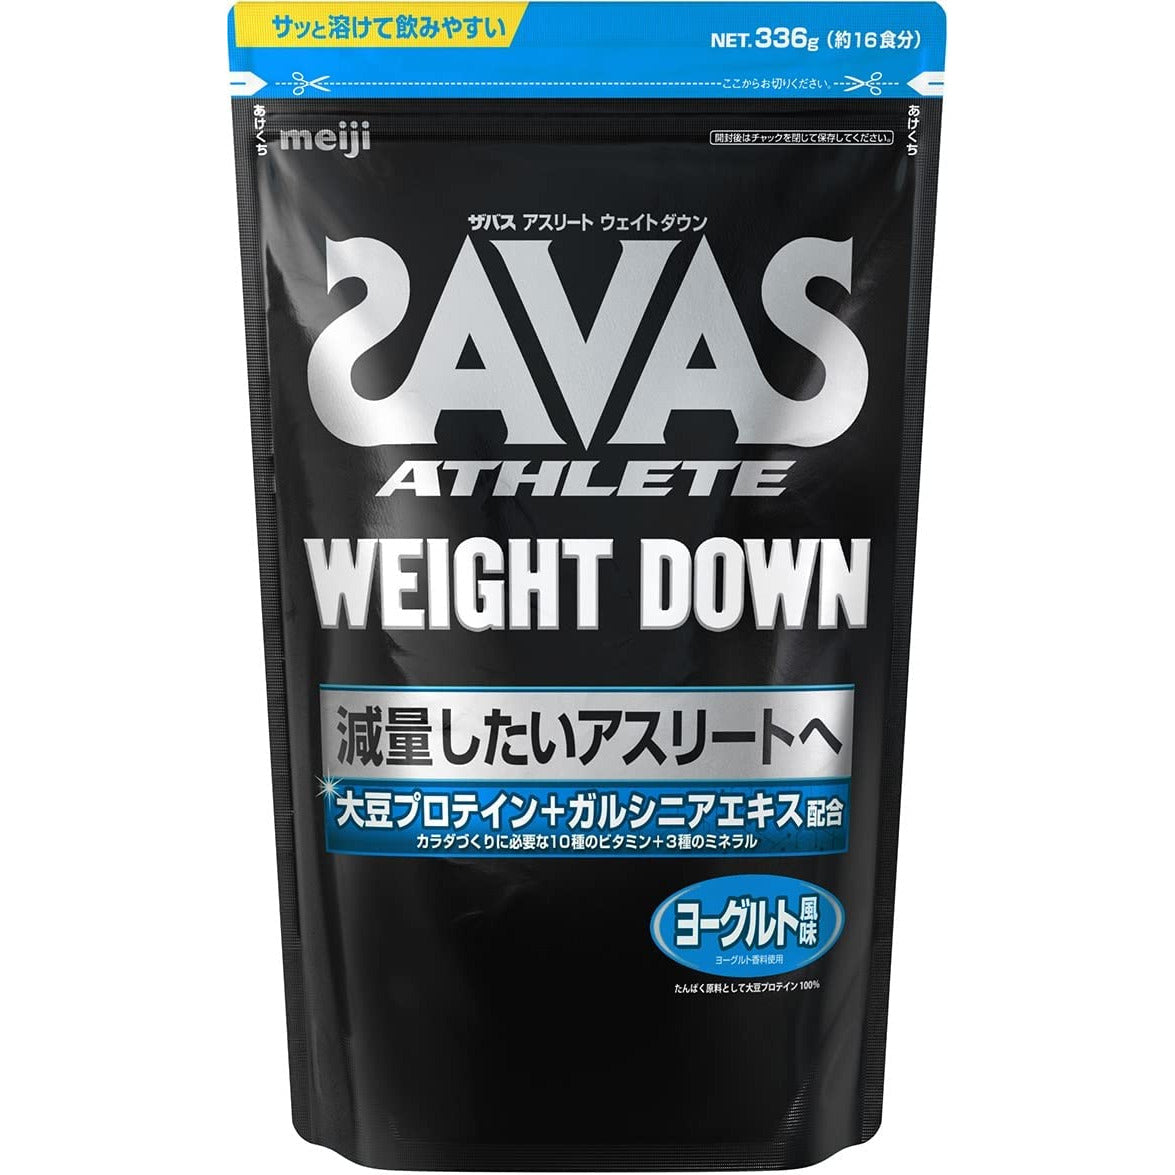 Meiji Zabas (SAVAS) Athlete Weight Down (Soy Protein + Garcinia) Yogurt Flavor [16 times] 336g